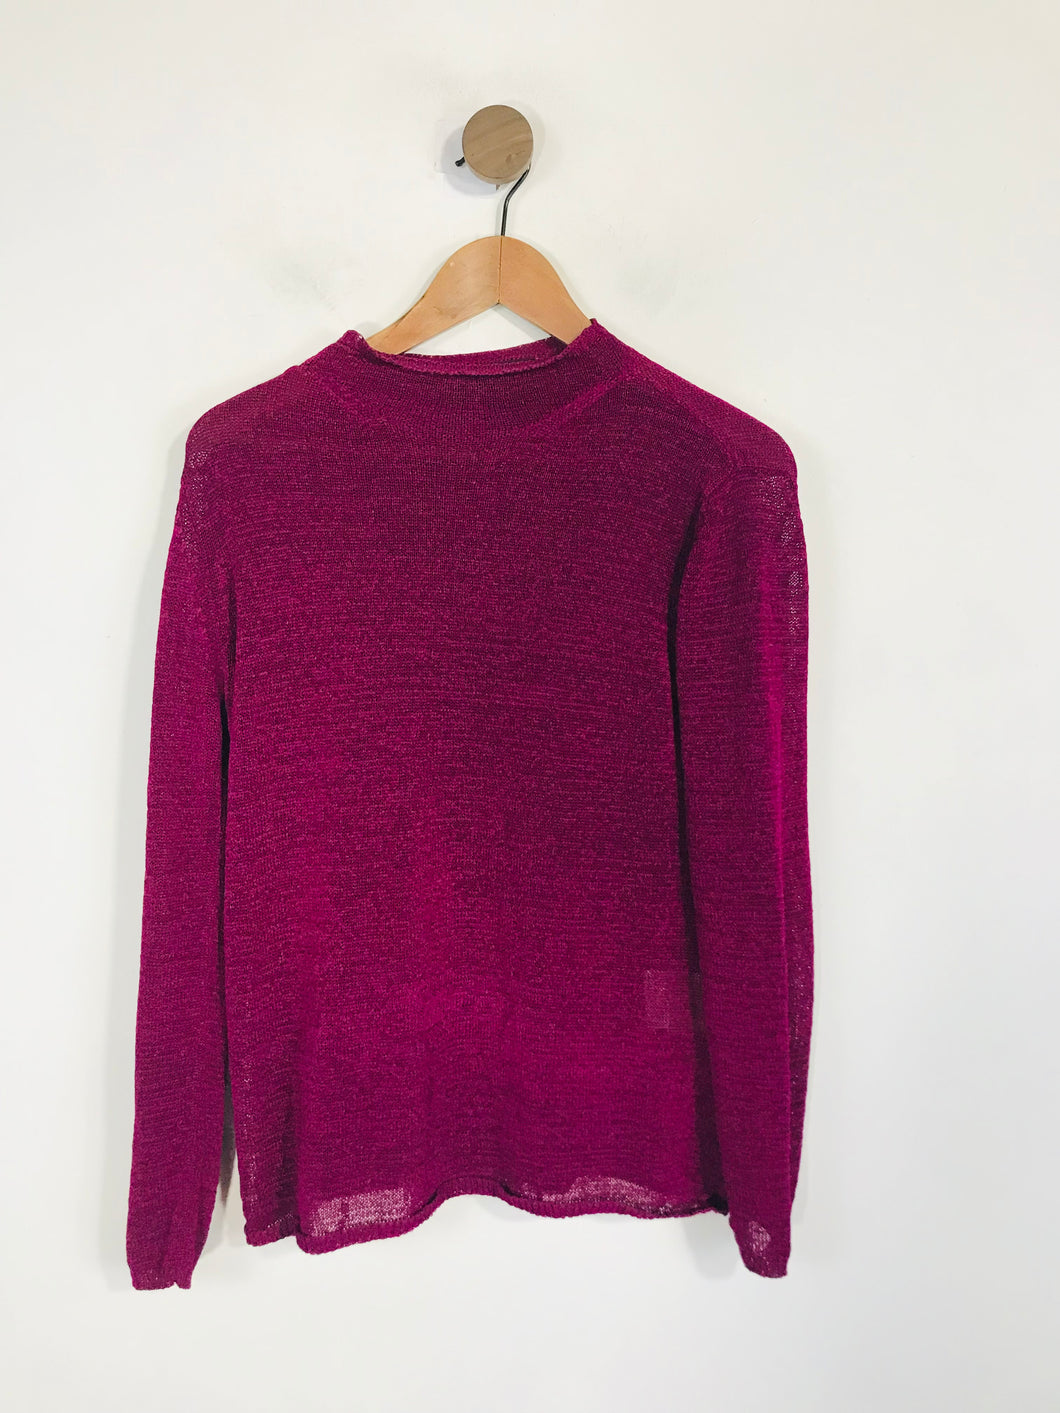 Karen Millen Women's Knit Sheer T-Shirt | M UK10-12 | Purple